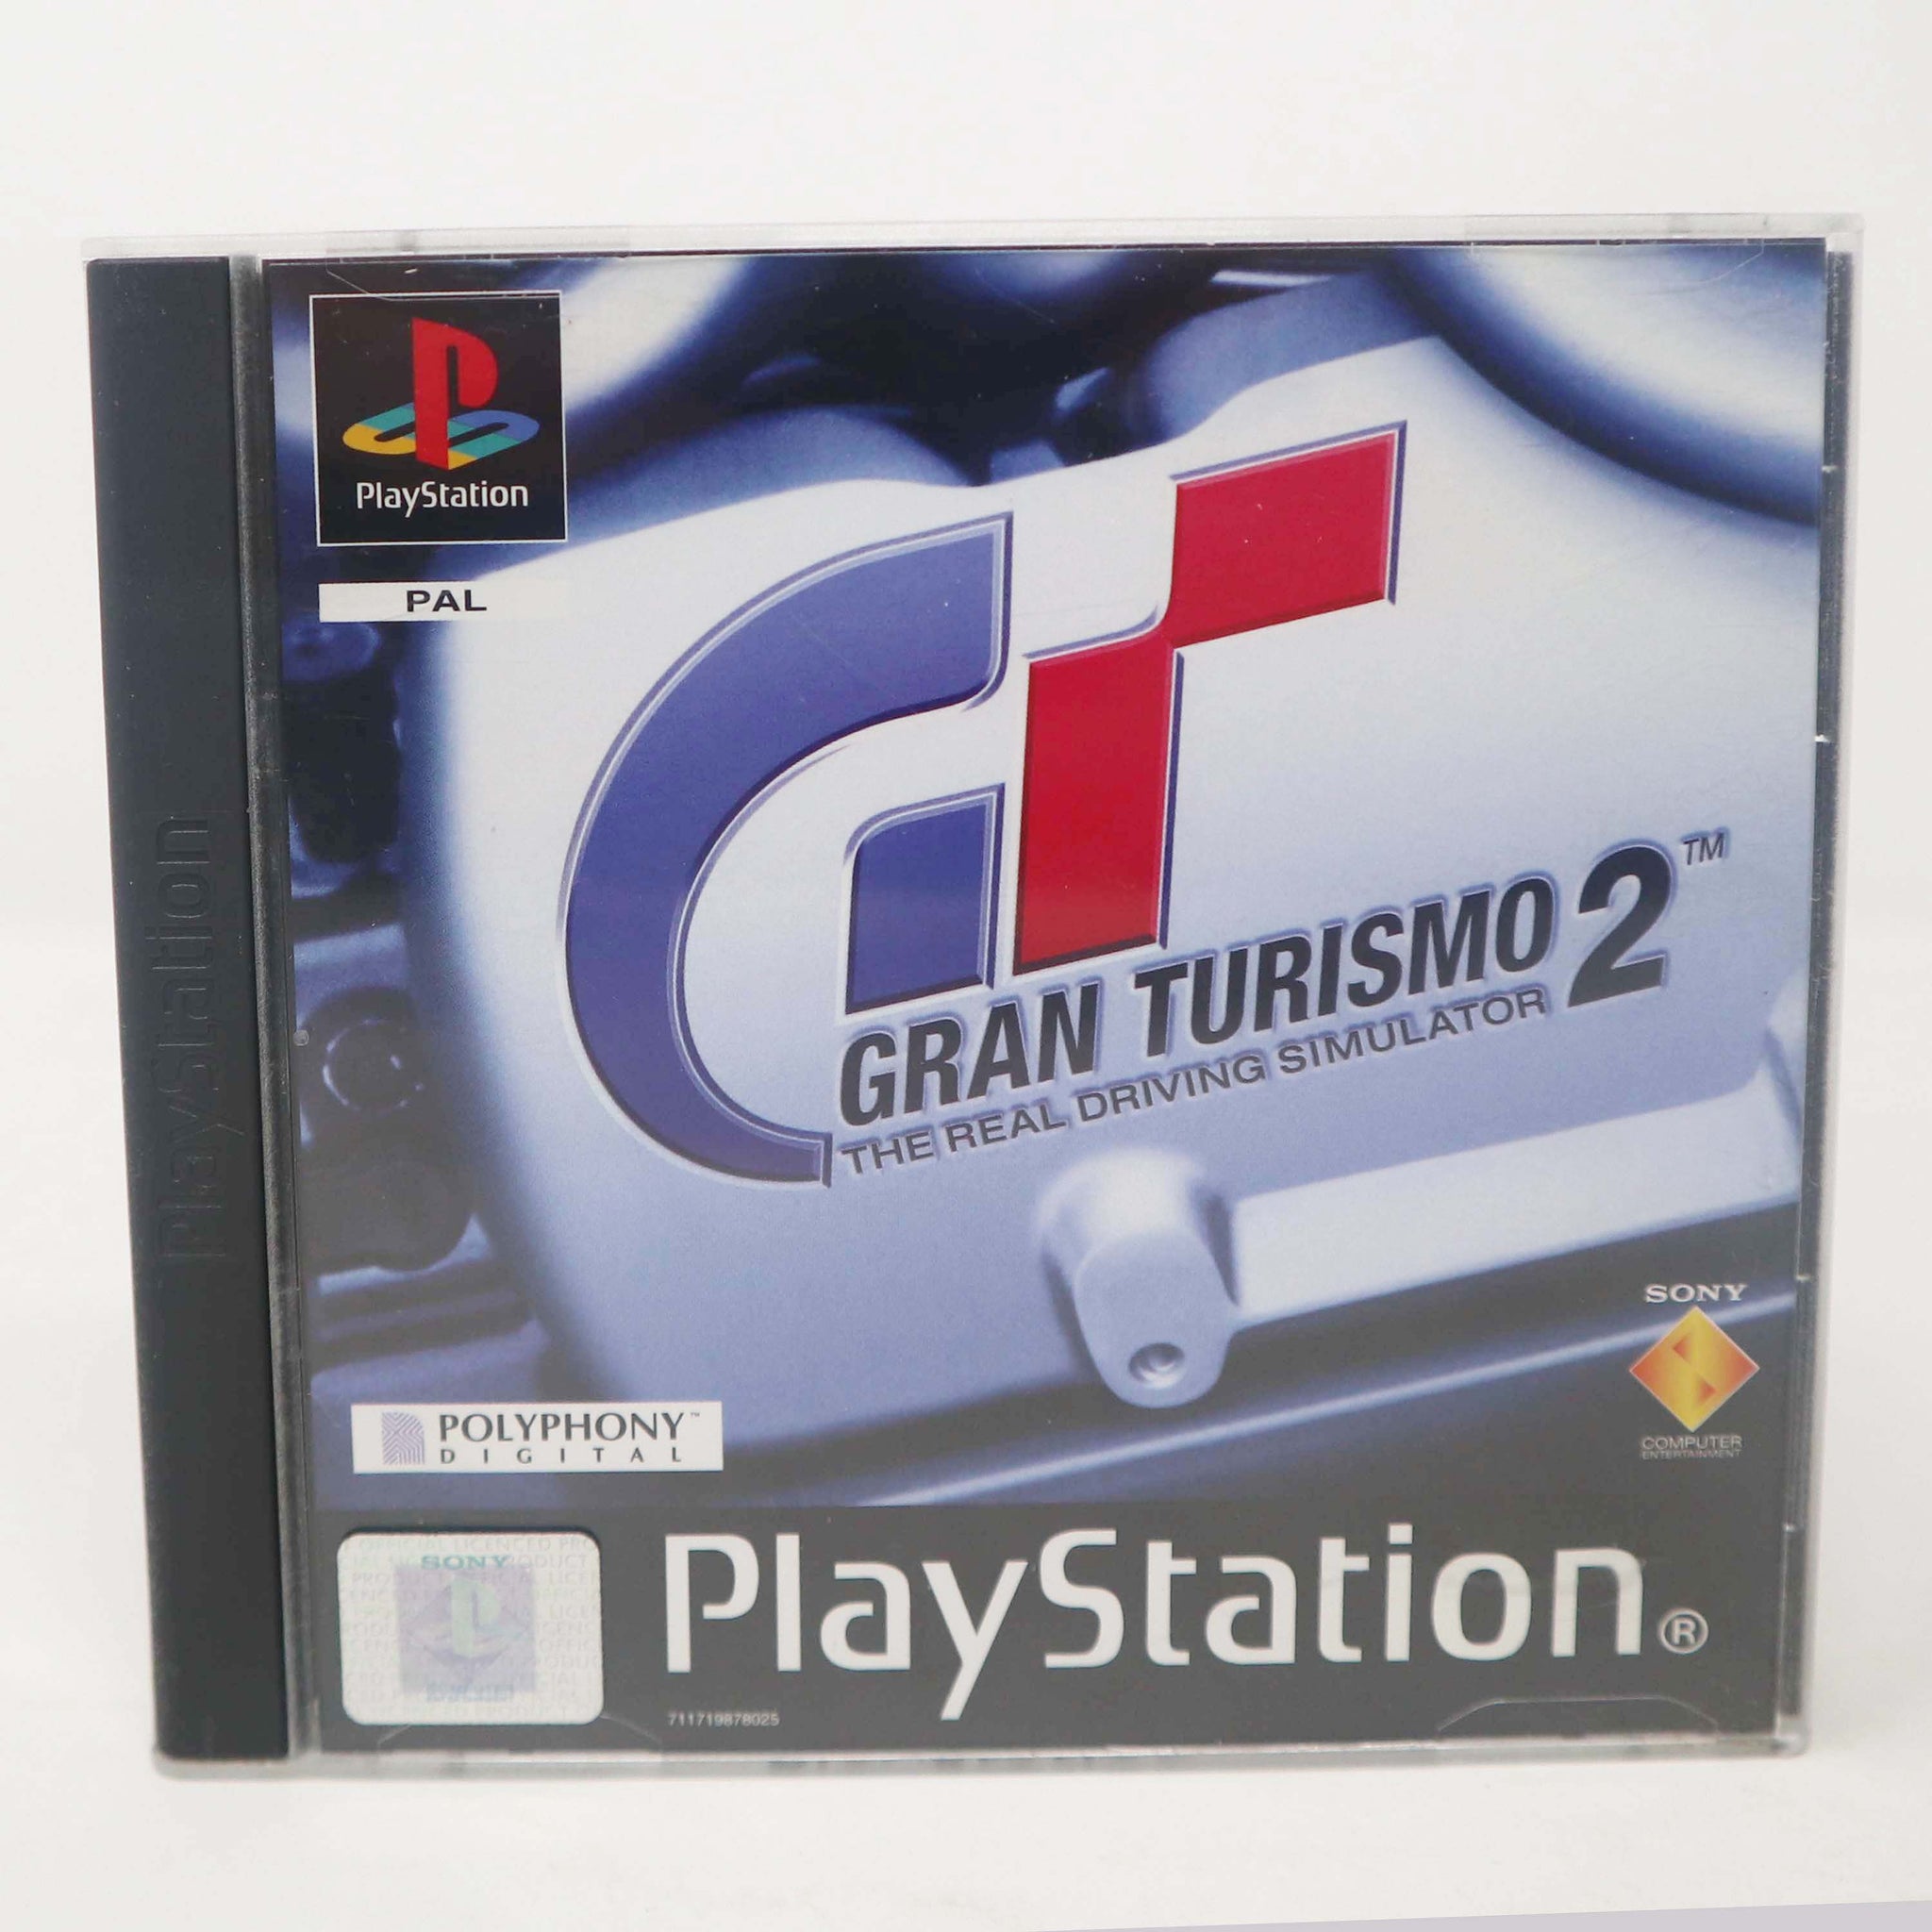 Vintage 1994 90s Playstation 1 PS1 Gran Turismo 2 Video Game Pal 1-2 Players Car Racing Driving Simulation